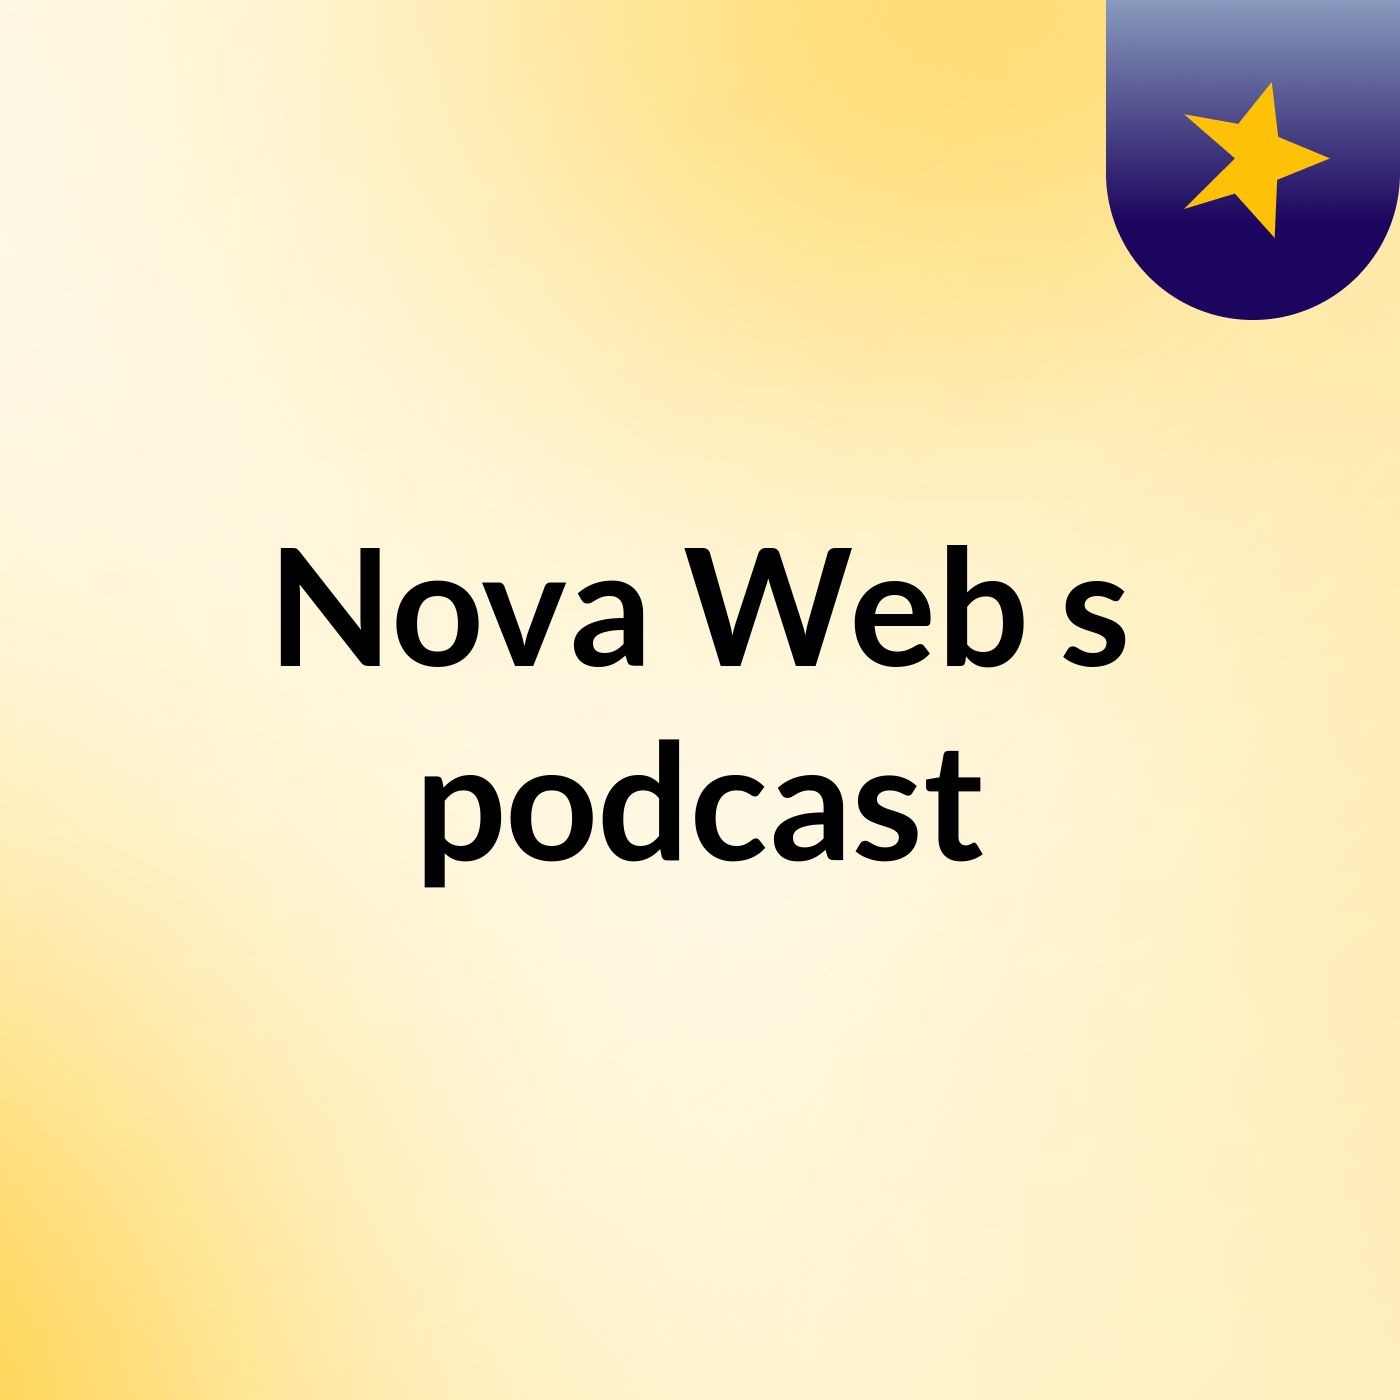 Nova Web's podcast